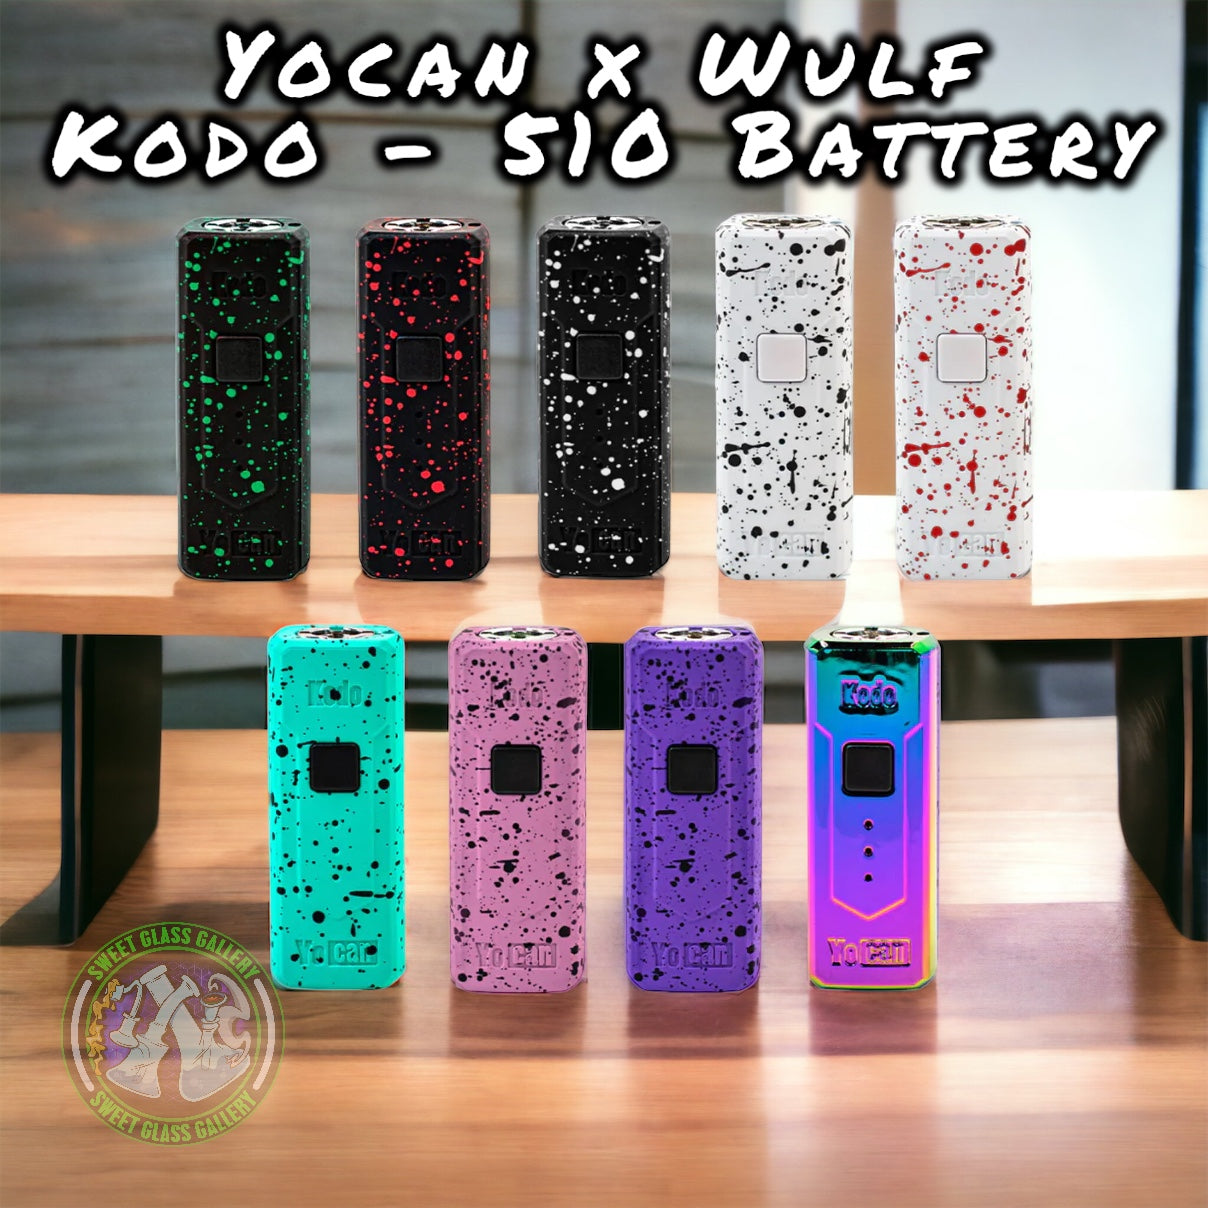 Yocan x Wulf - Kodo Cartridge 510 Battery